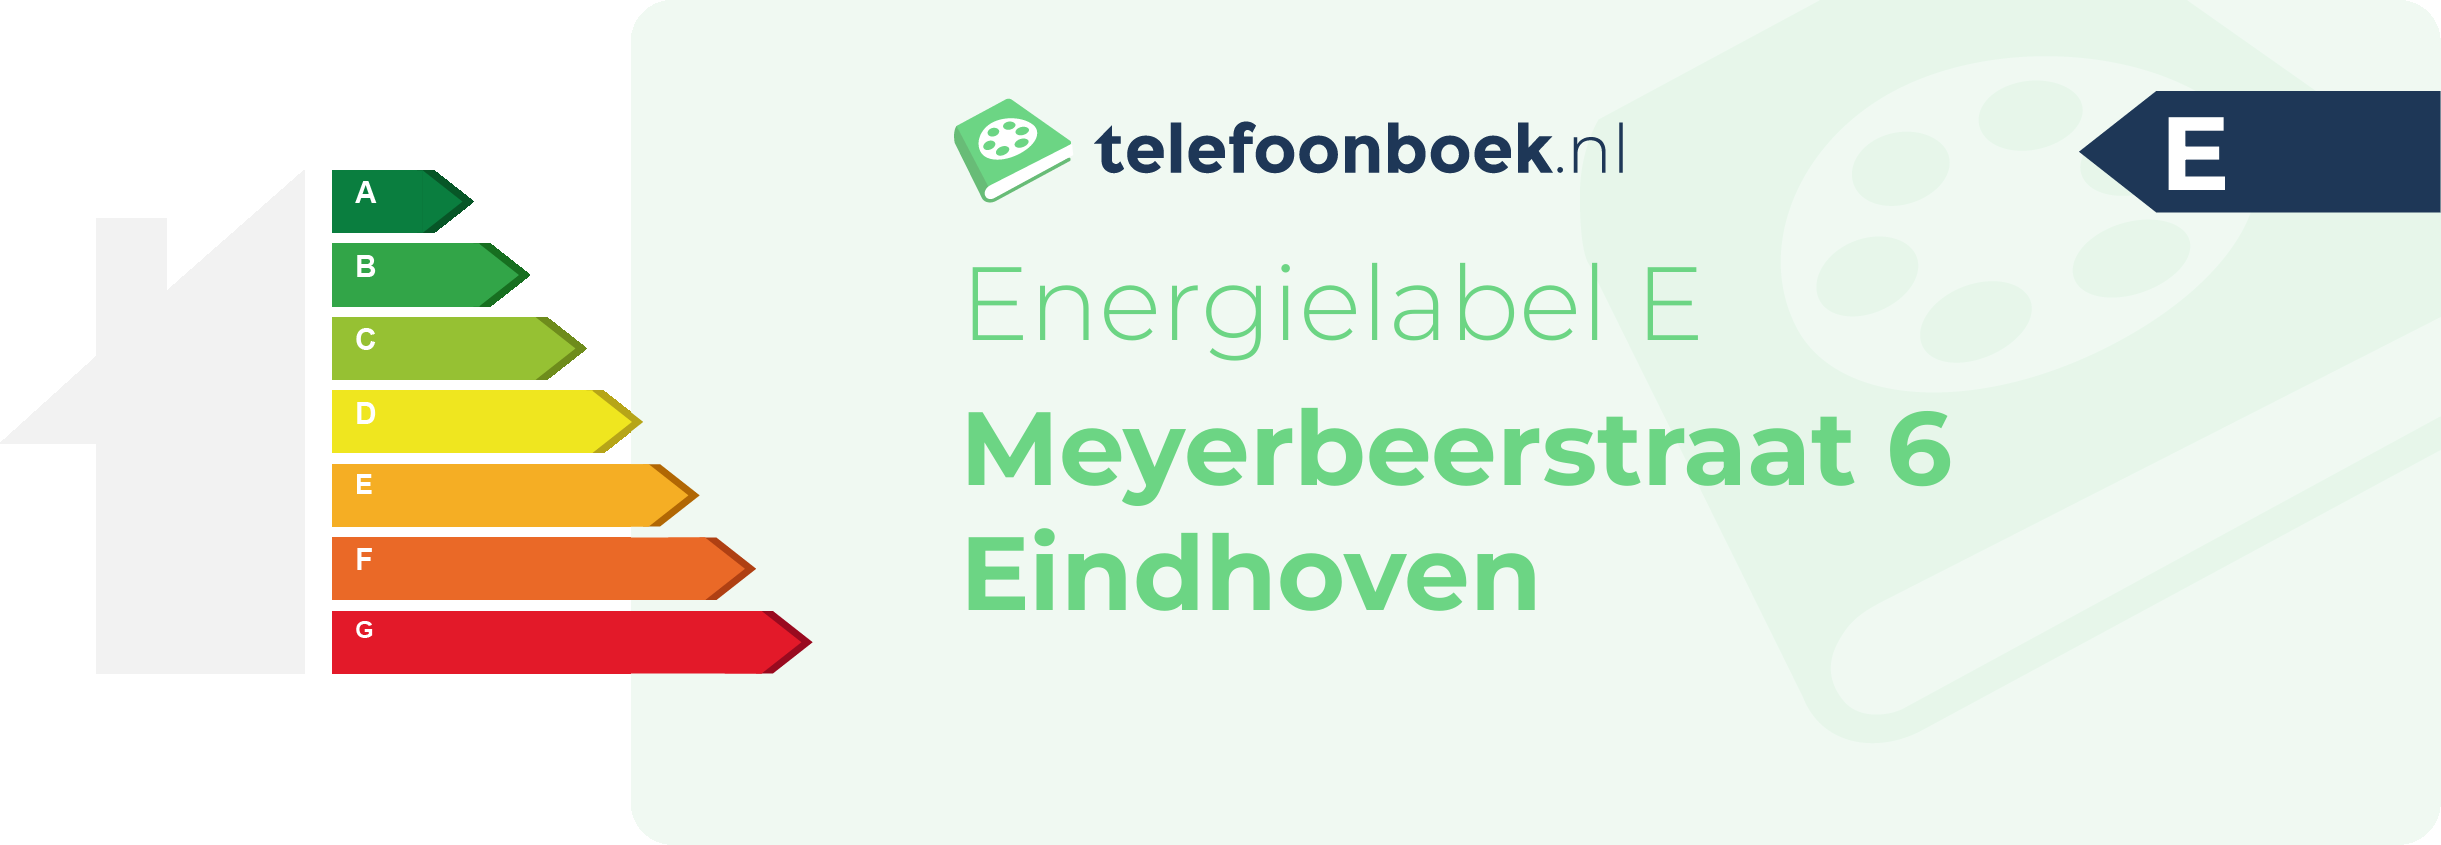 Energielabel Meyerbeerstraat 6 Eindhoven